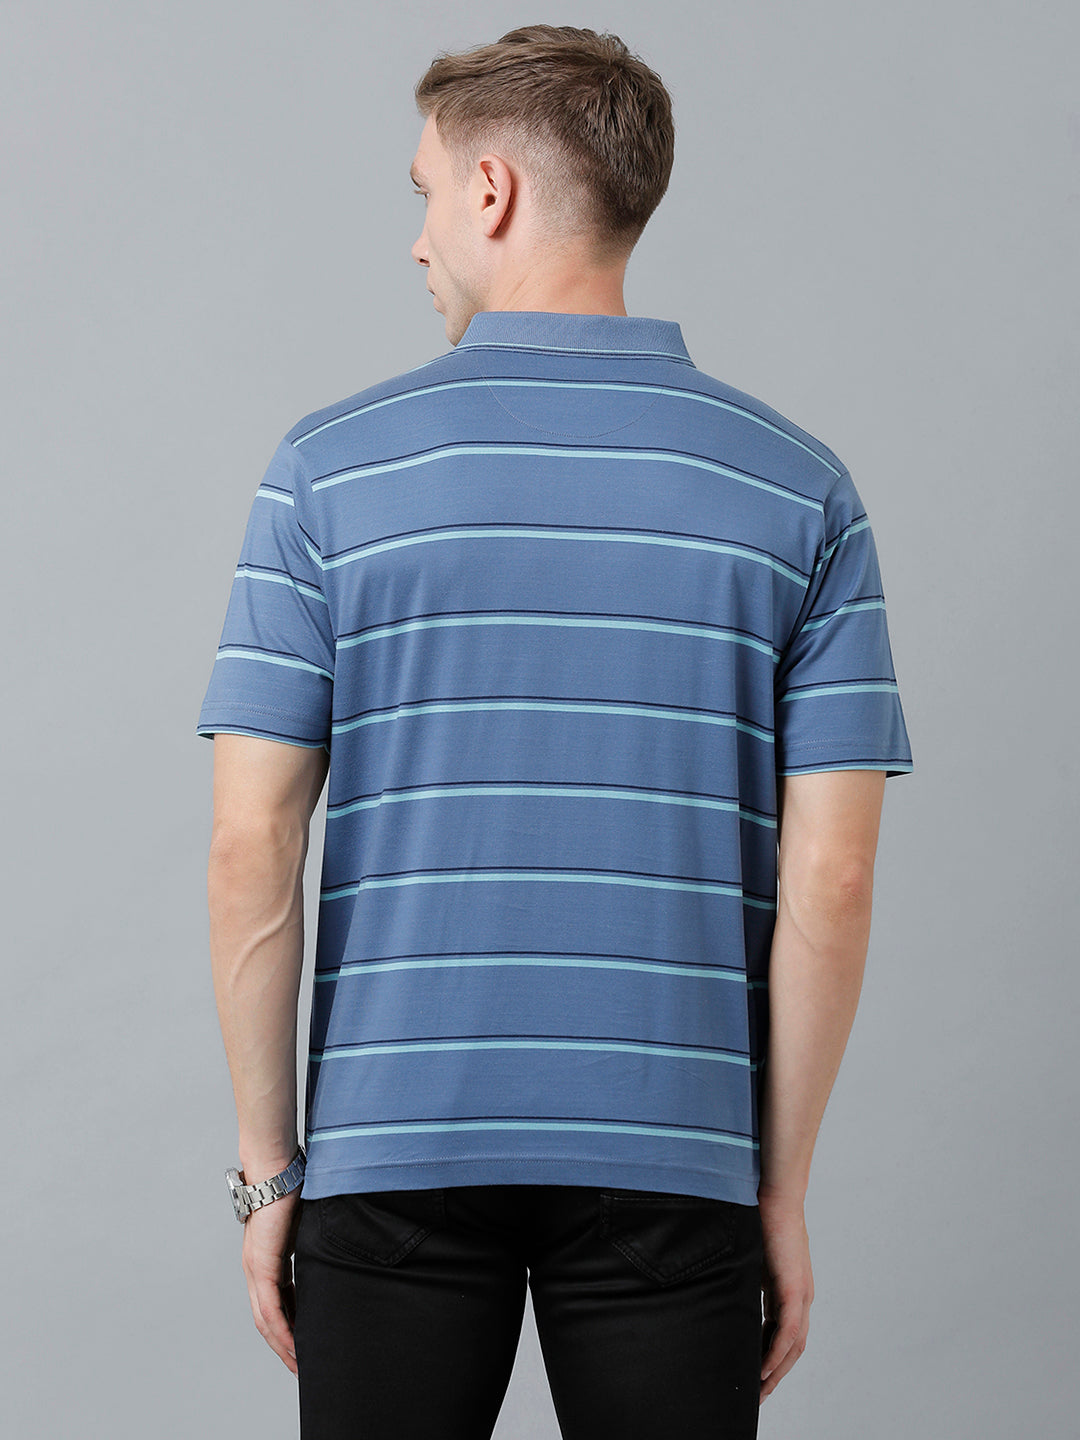 Classic Polo Men's Cotton Half Sleeve Striped Authentic Fit Polo Neck Blue Color T-Shirt | Ap - 89 A